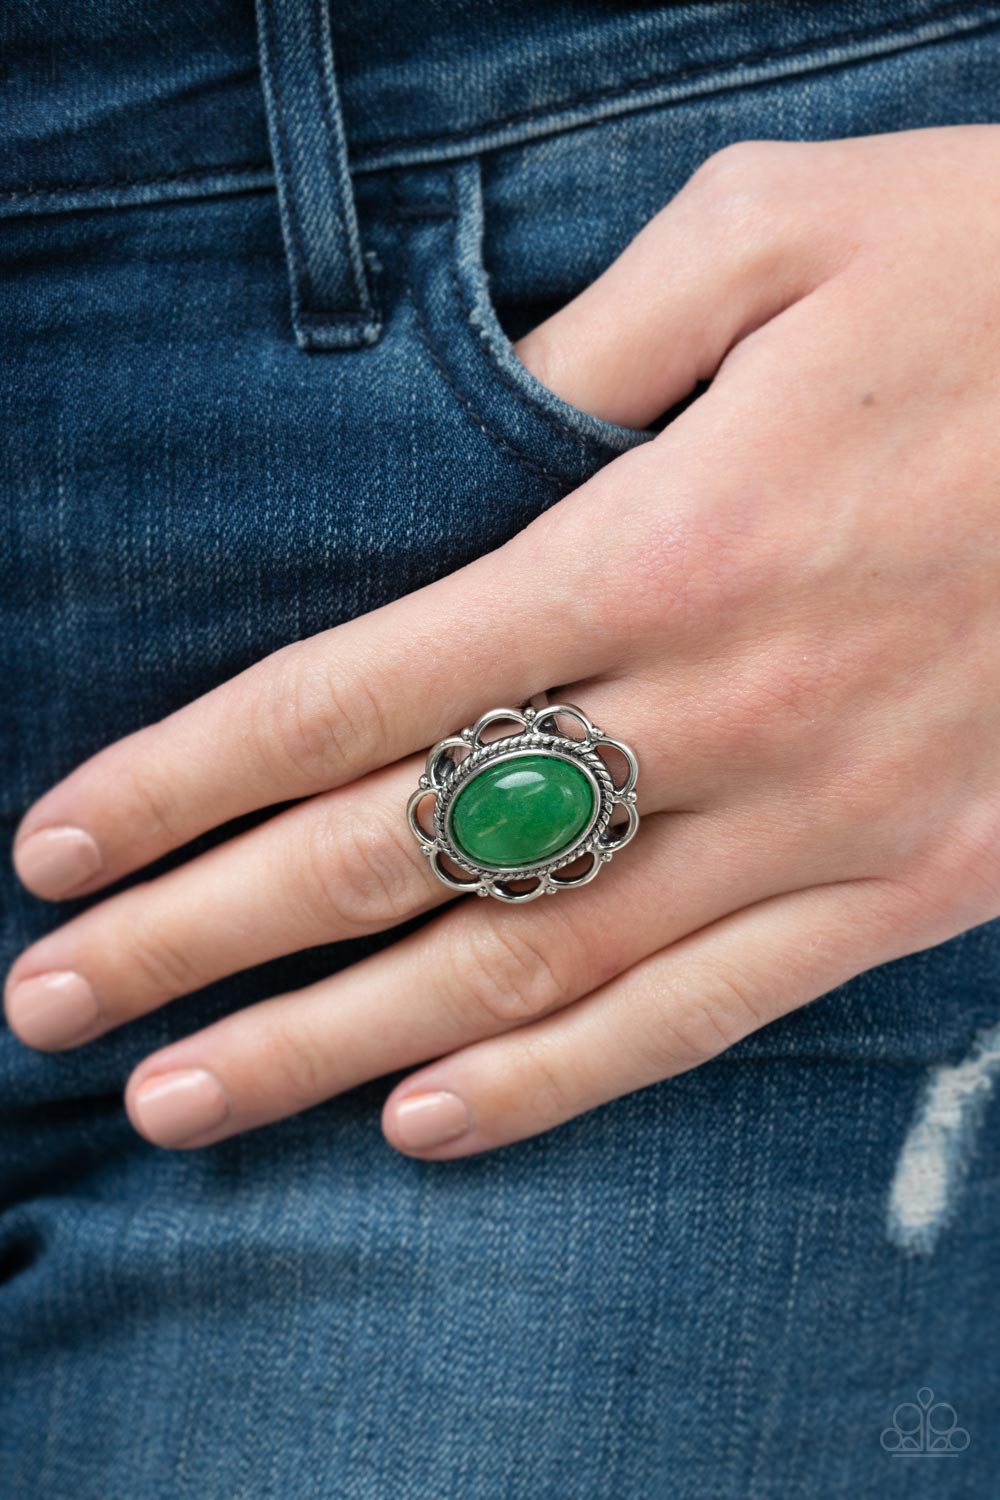 Gemstone Eden Green Jade Stone Ring - Paparazzi Accessories- lightbox - CarasShop.com - $5 Jewelry by Cara Jewels